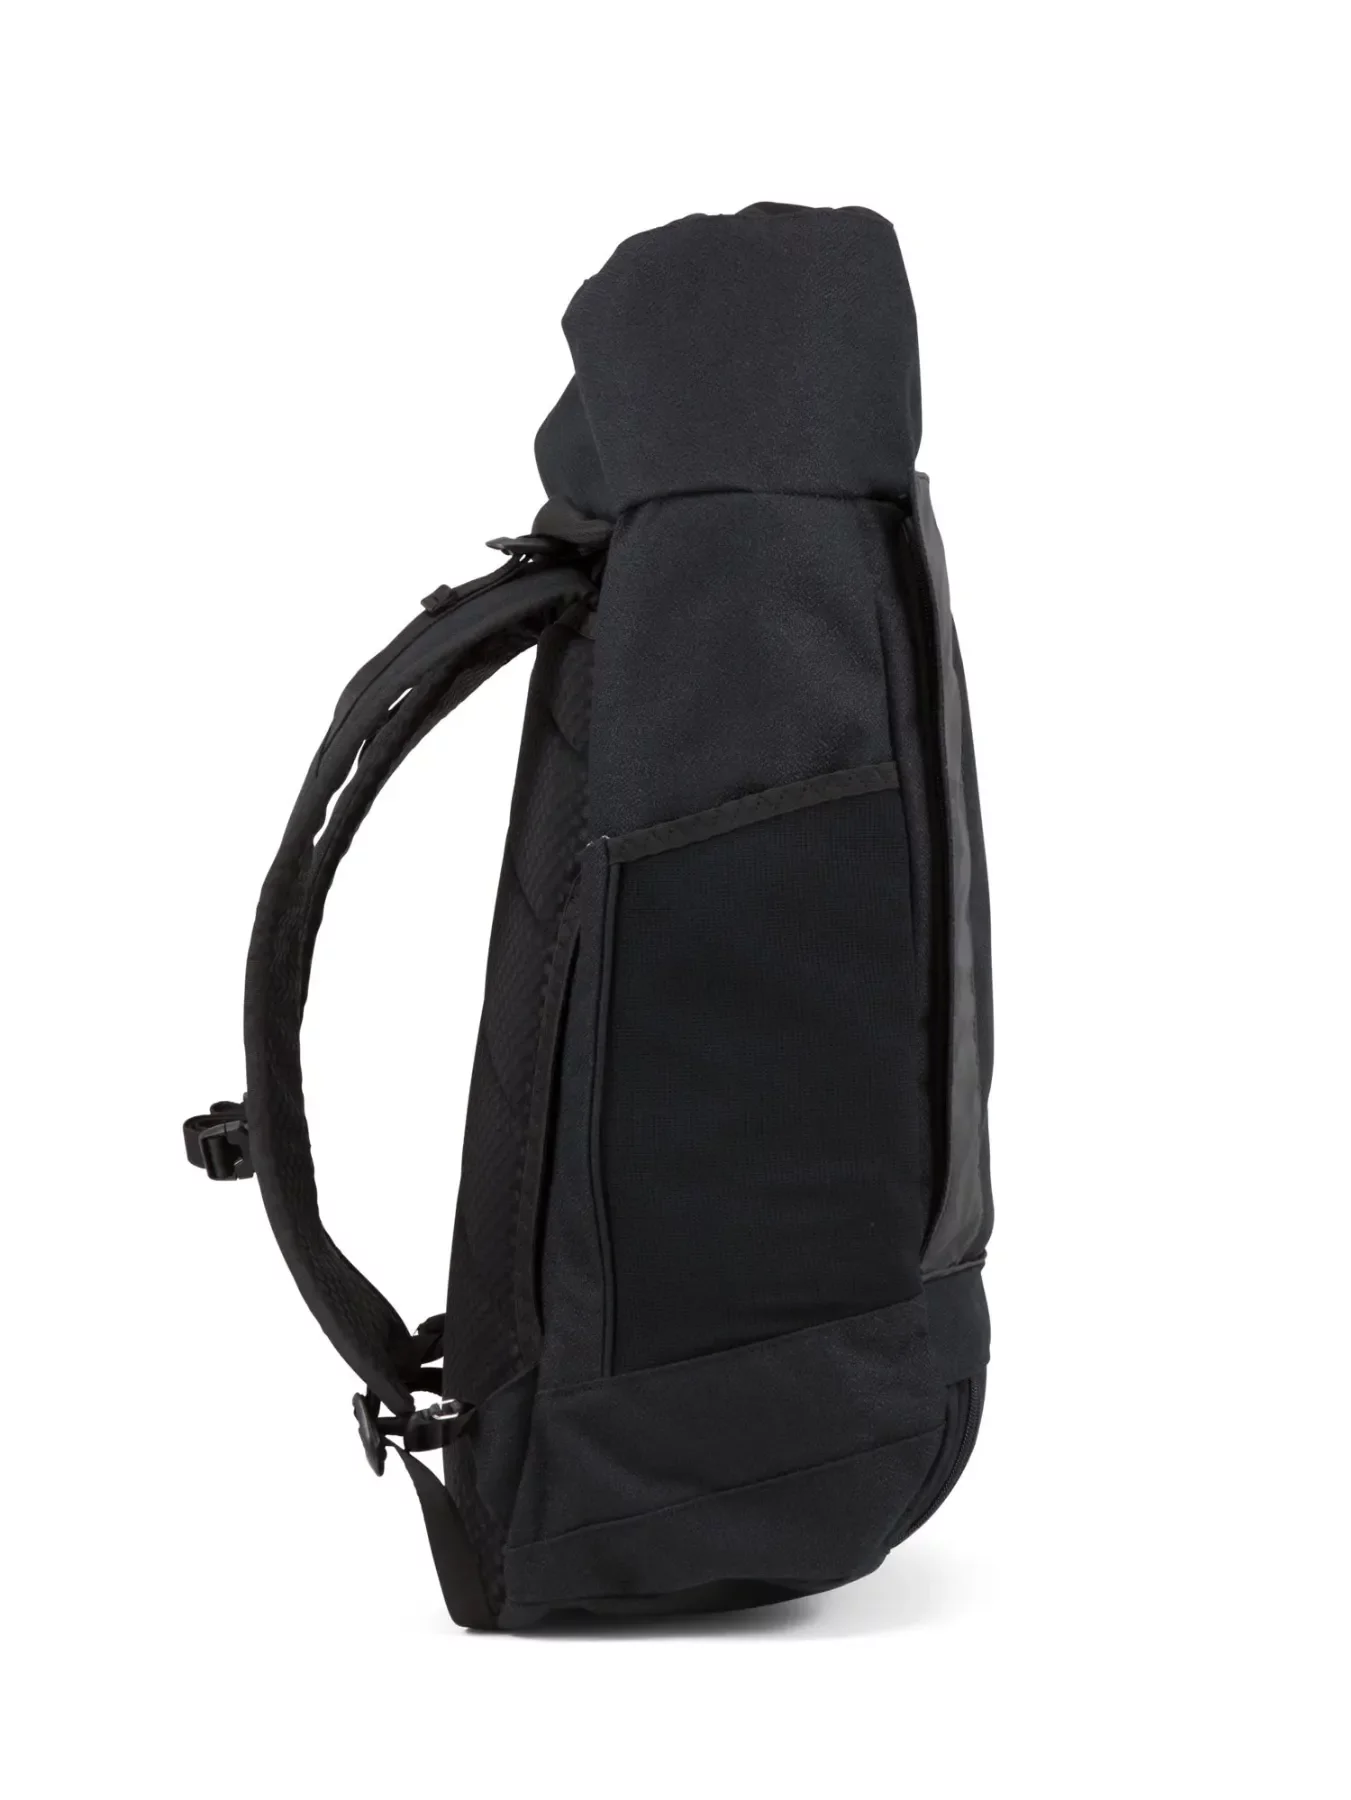 pinqponq Backpack BLOK large - Licorice Black 4